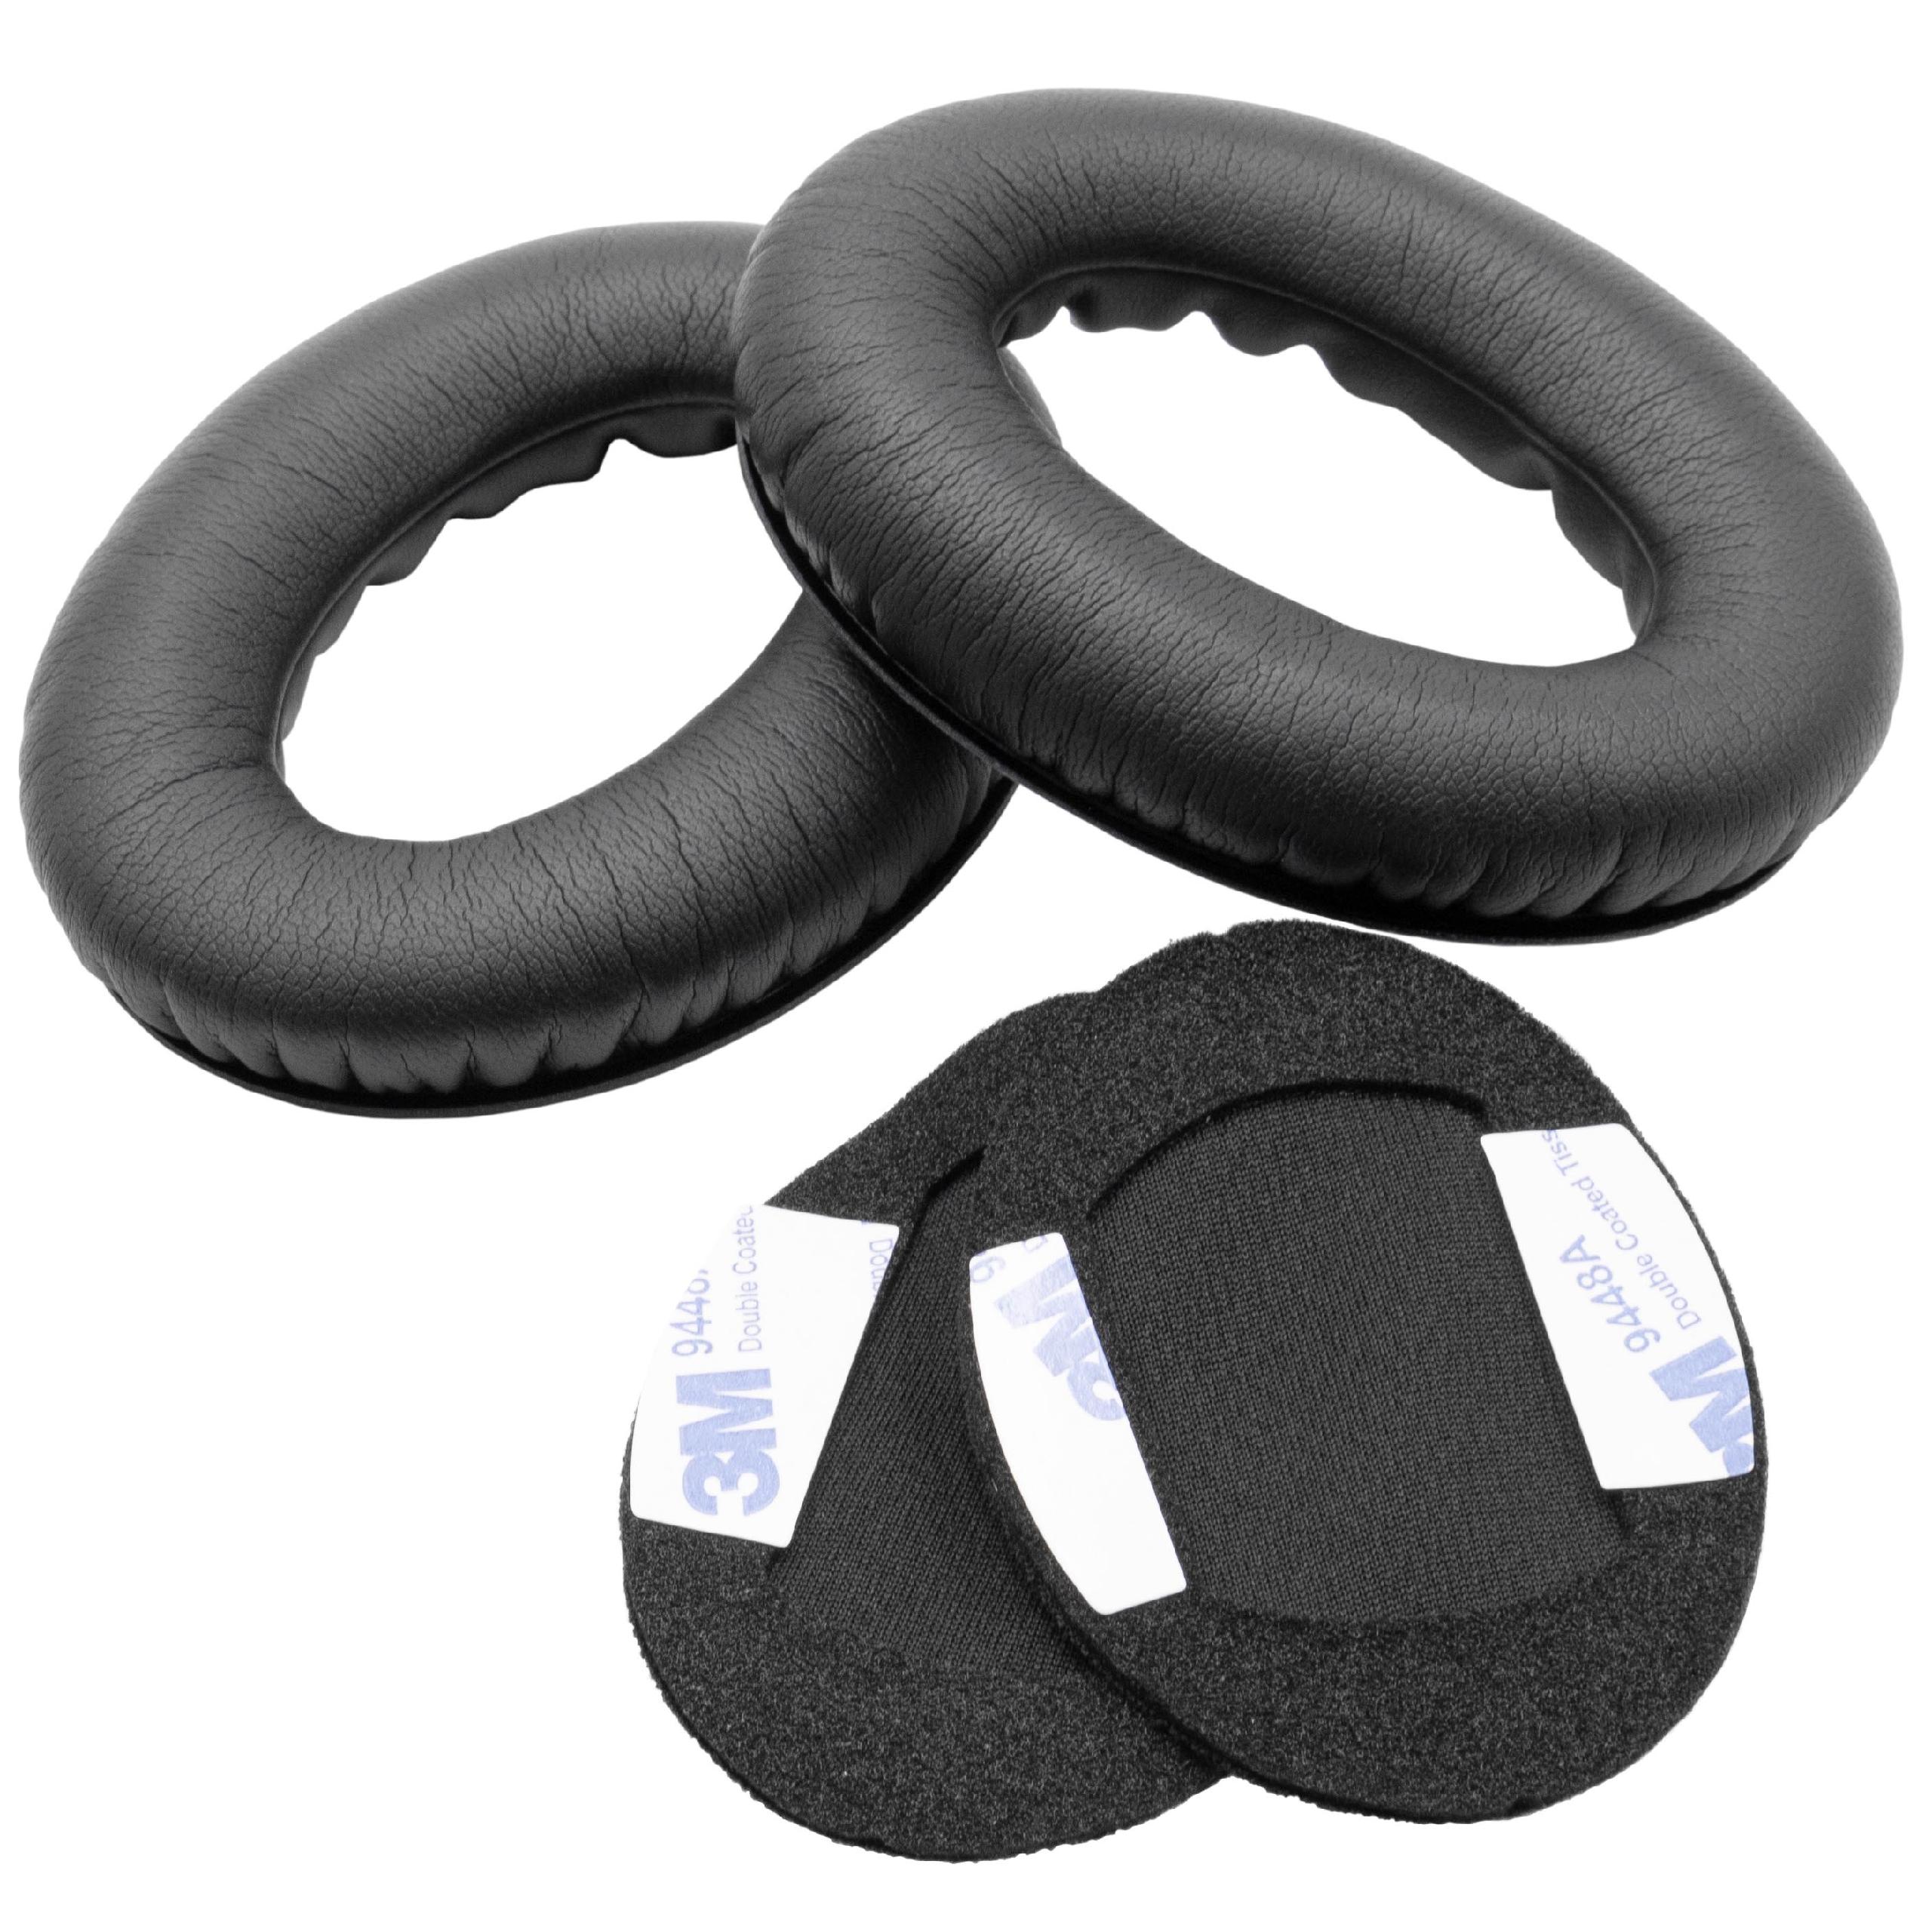 1 paio di cuscinetti per Bose Around-Ear cuffie ecc. - poliuretano / gommapiuma, 8,4 x 6,5 cm, 13 mm spessore,